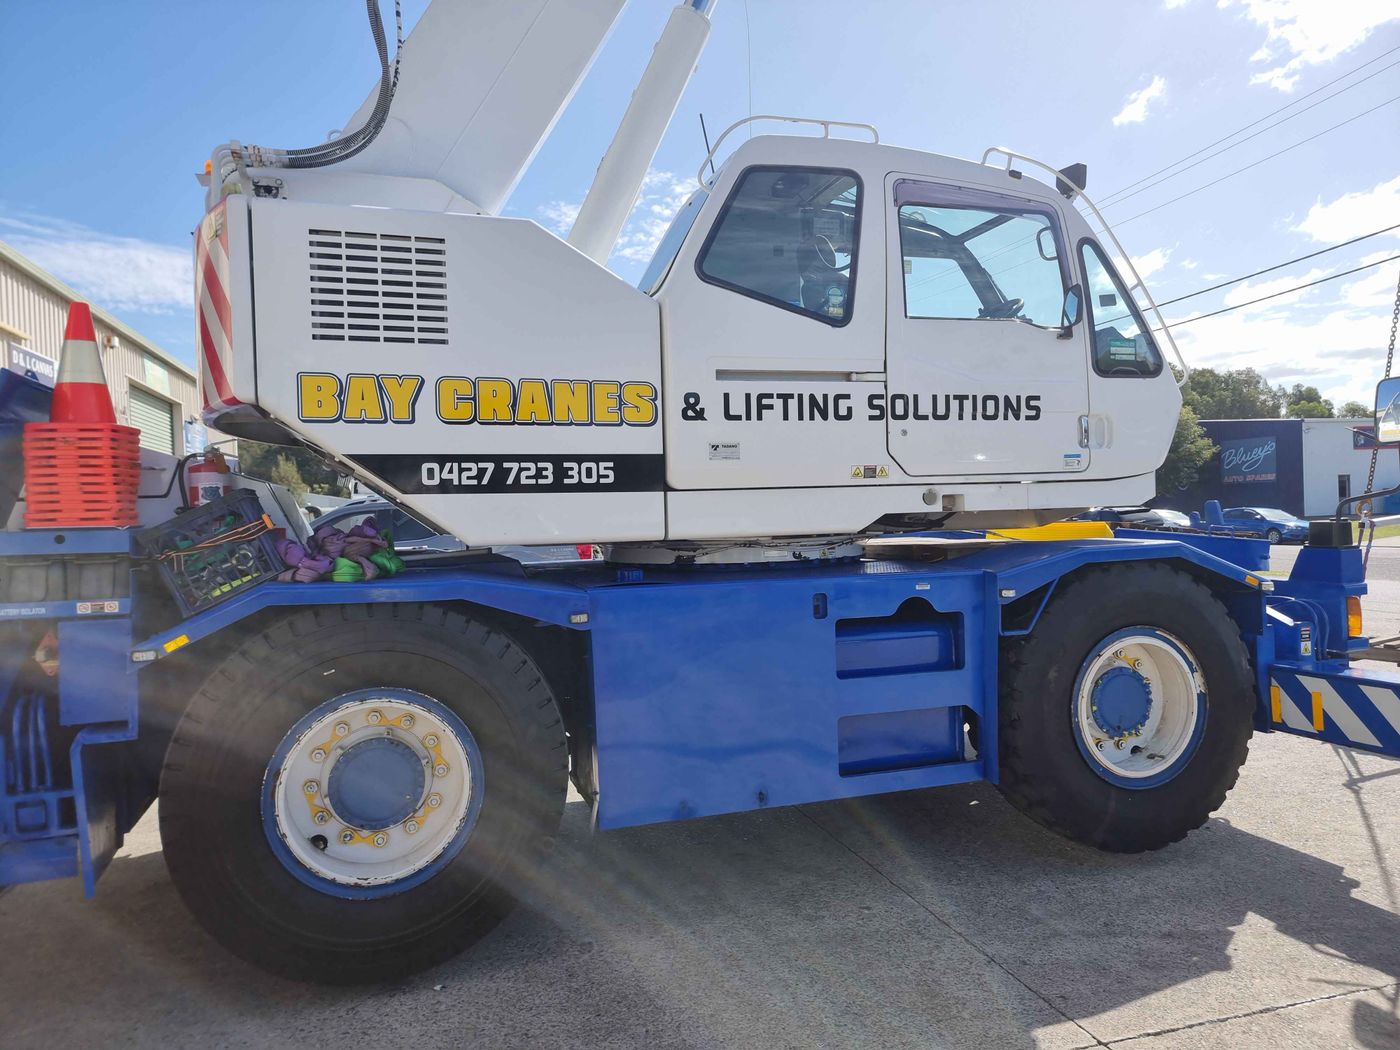 Bay Cranes & Lifting Solutions image